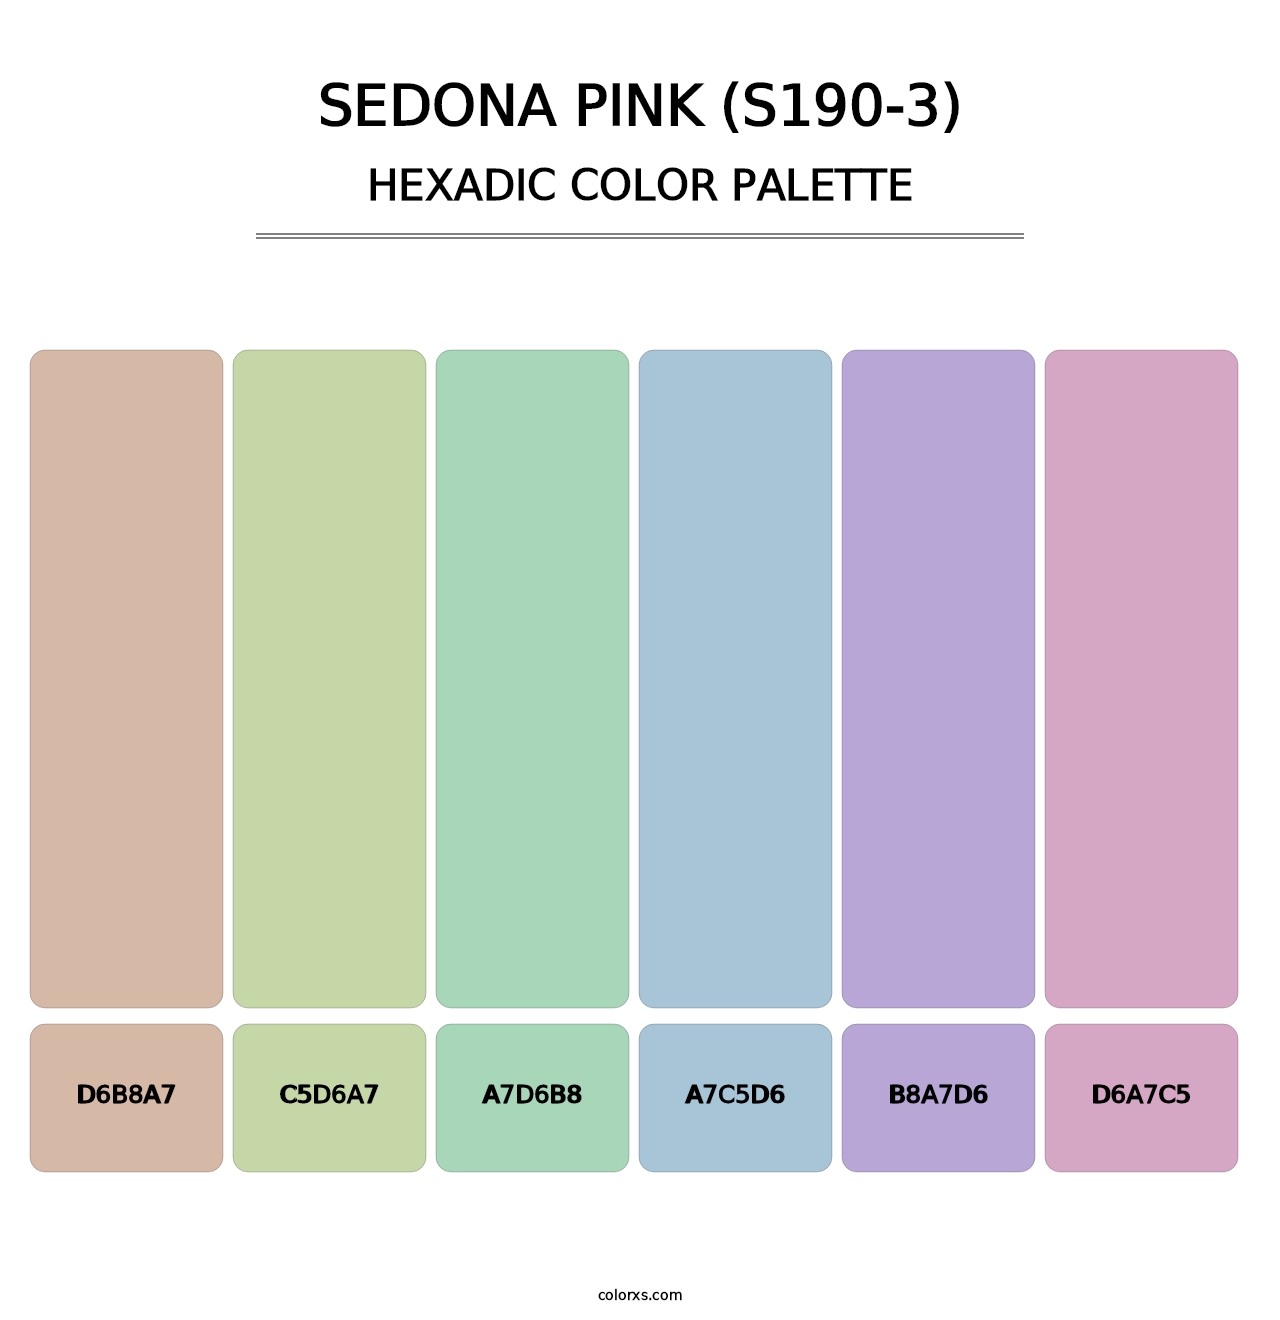 Sedona Pink (S190-3) - Hexadic Color Palette